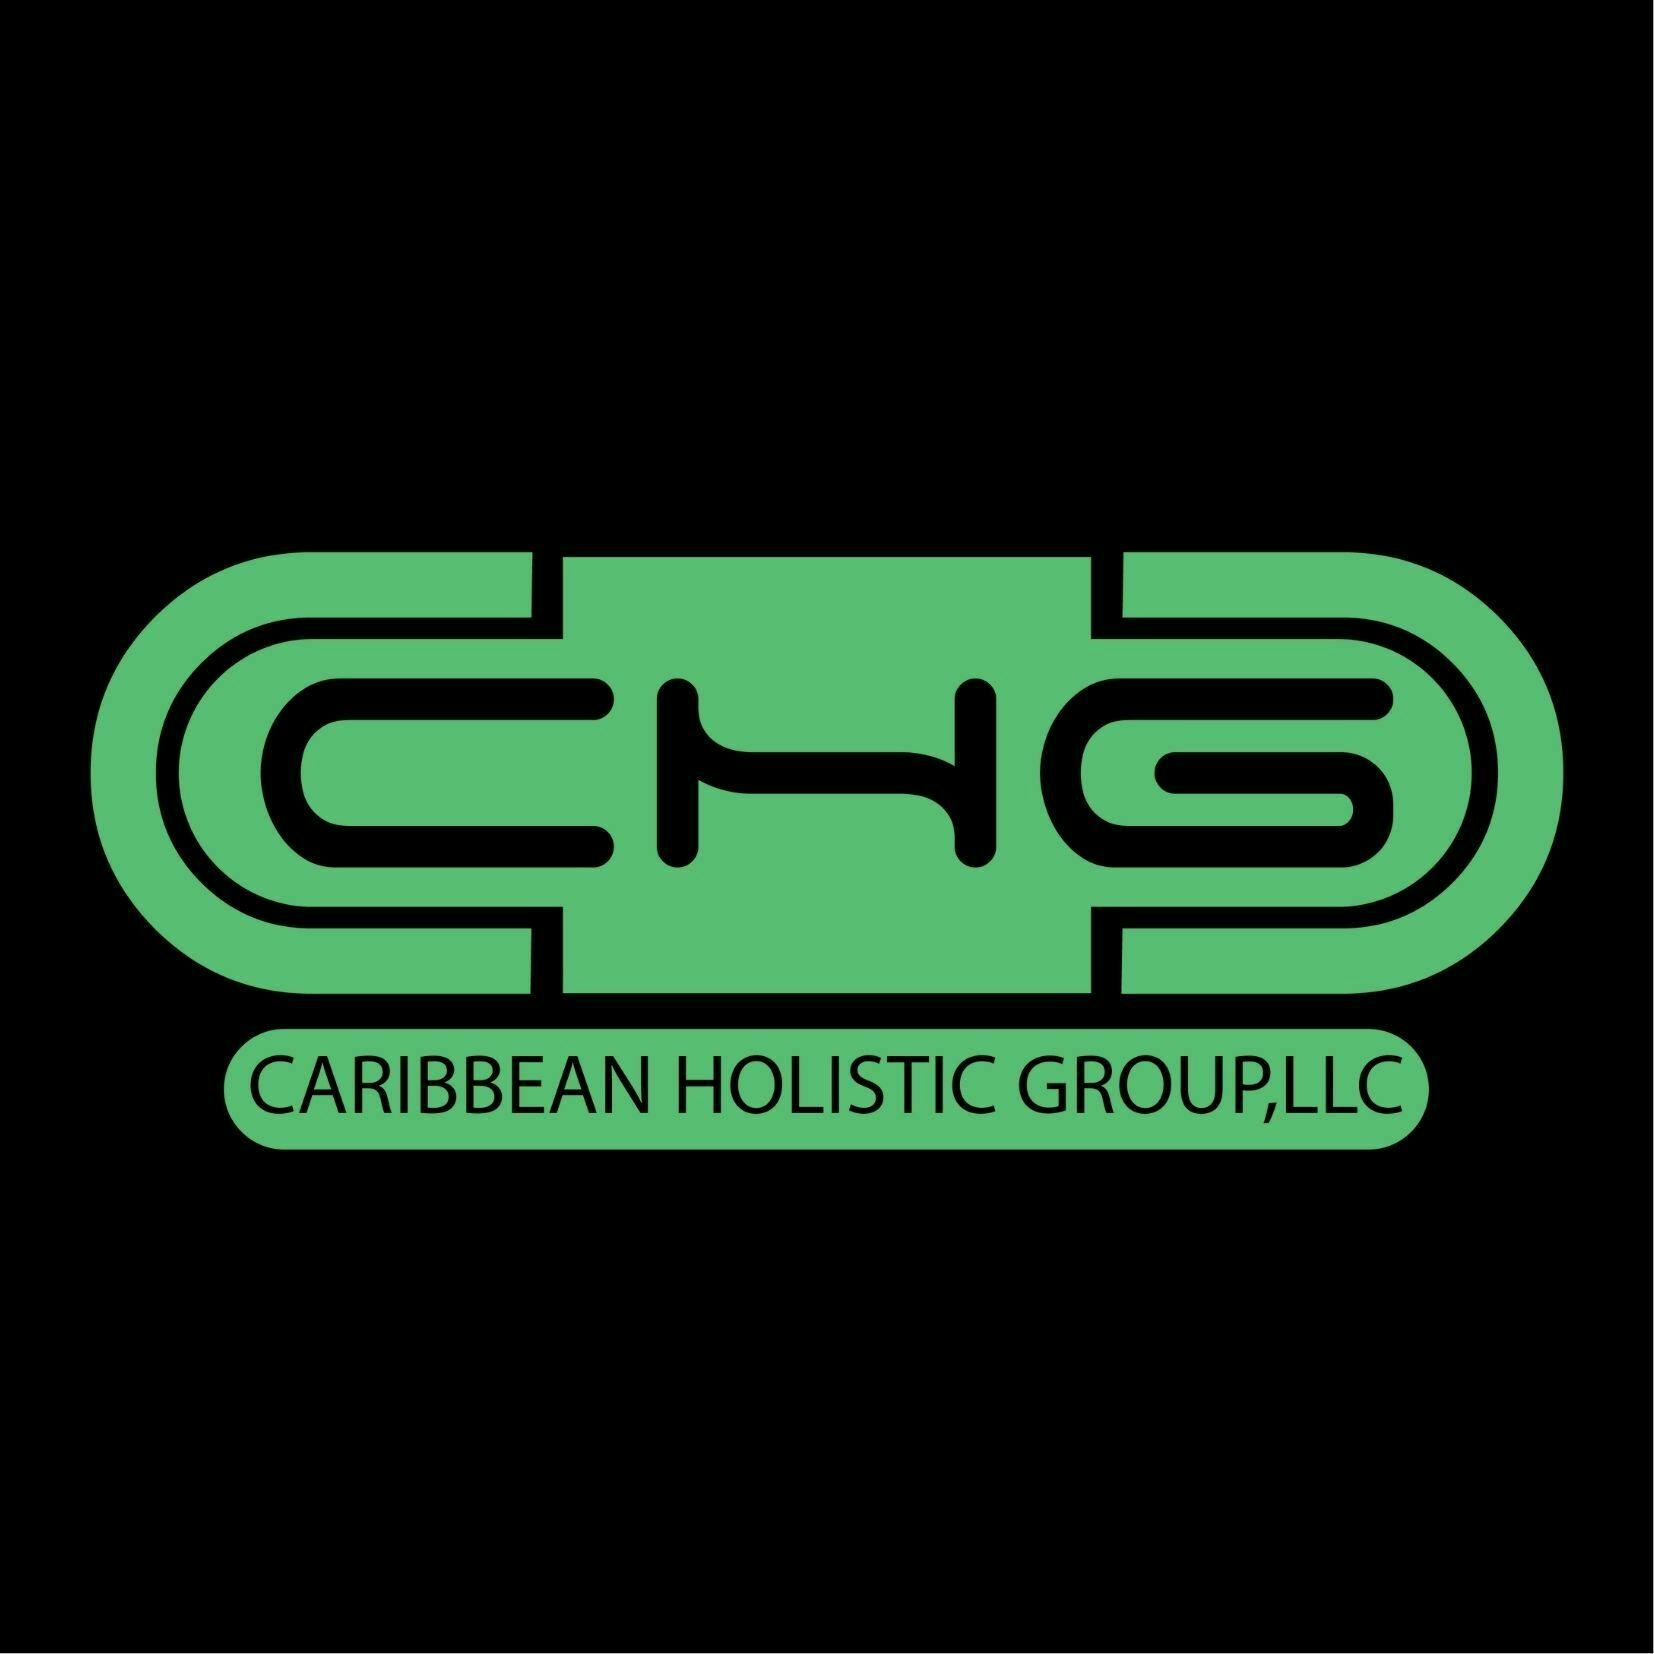 Caribbean Holistic Group LLC